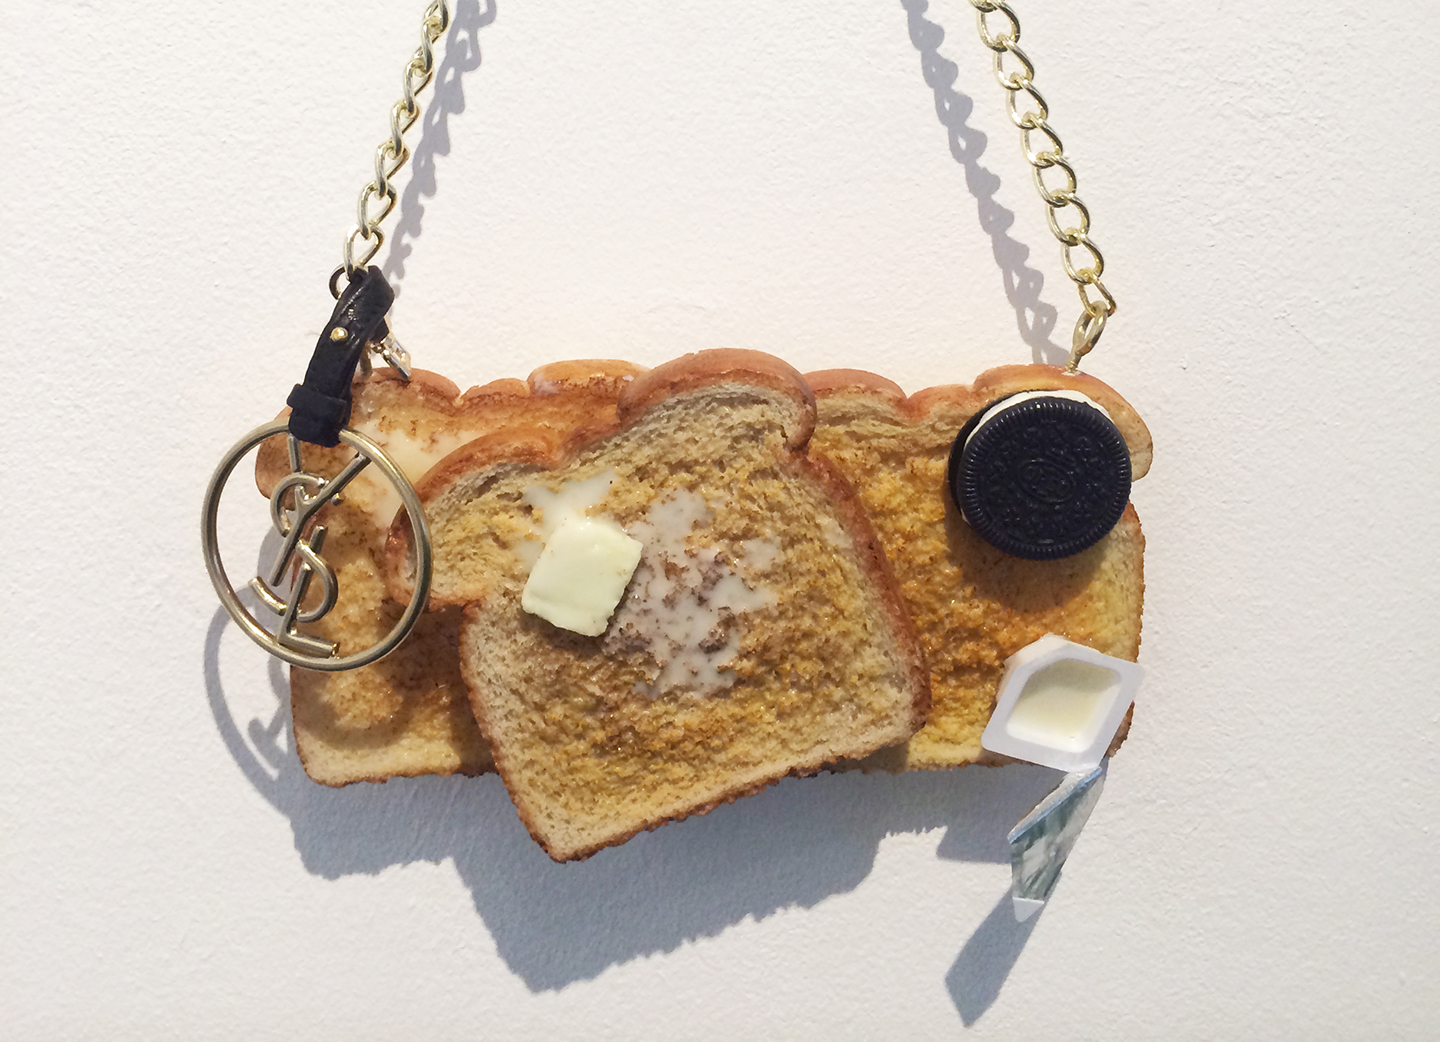 Toast au beurre YSL-Chloe Wise-2015-Oil, urethane, butter packet, hardware-38x25x5cm-unique.jpg